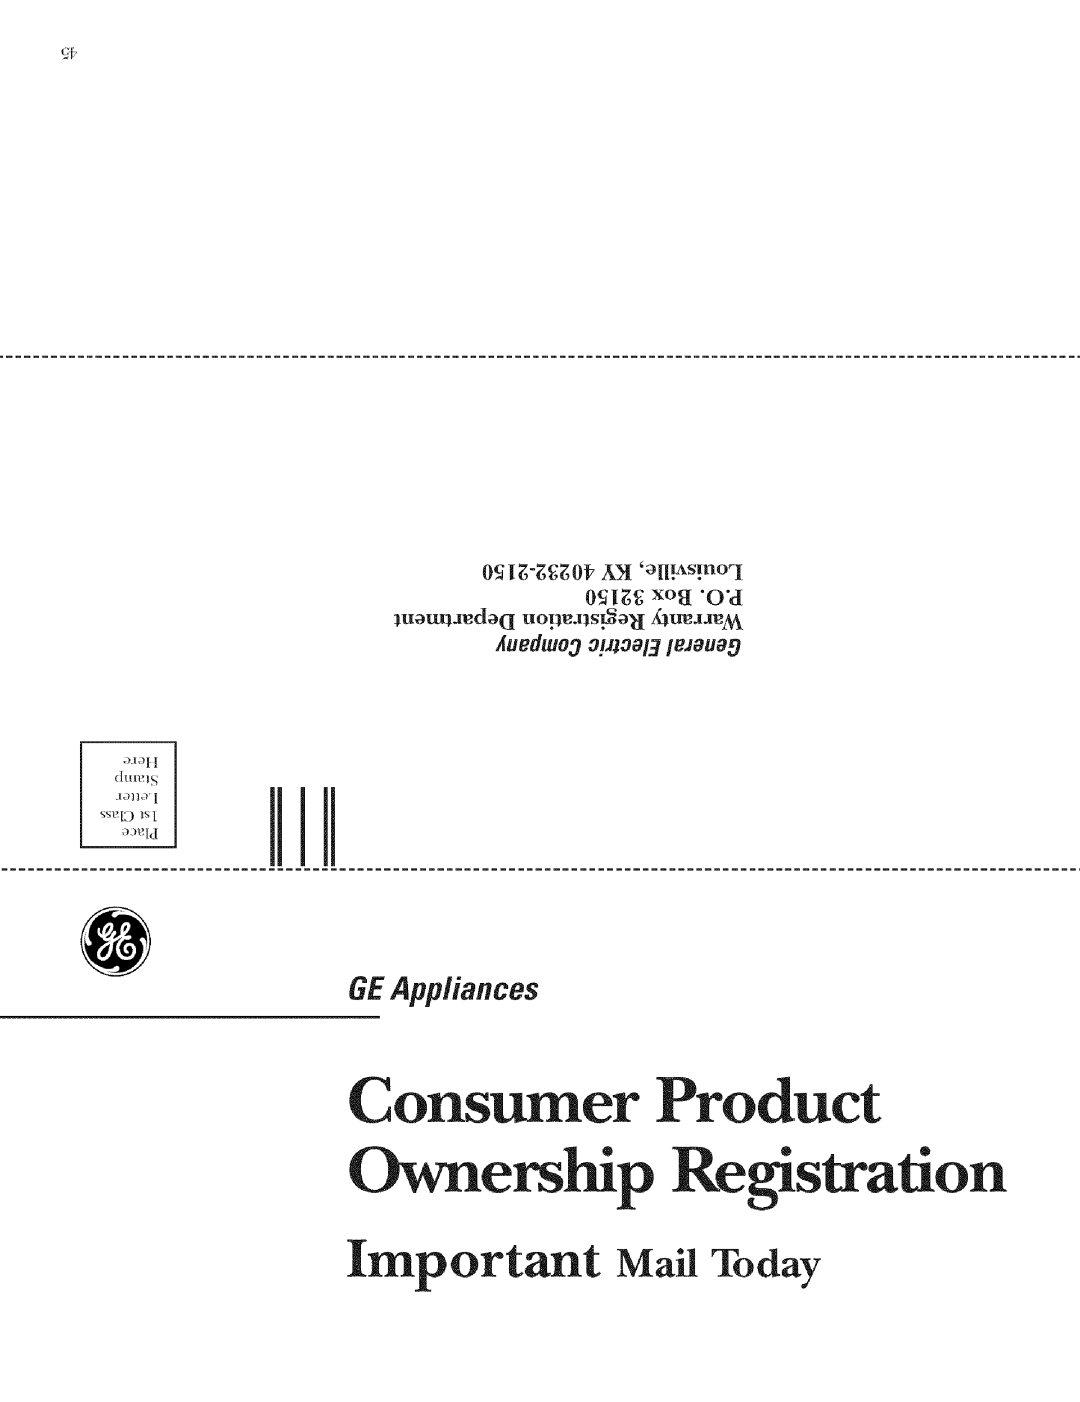 GE Monogram ZET1, ZET2 manual GEAppliances, Ownership Registration, Consumer Product, Important Mail Today, O_Ig_ xo8 Od 